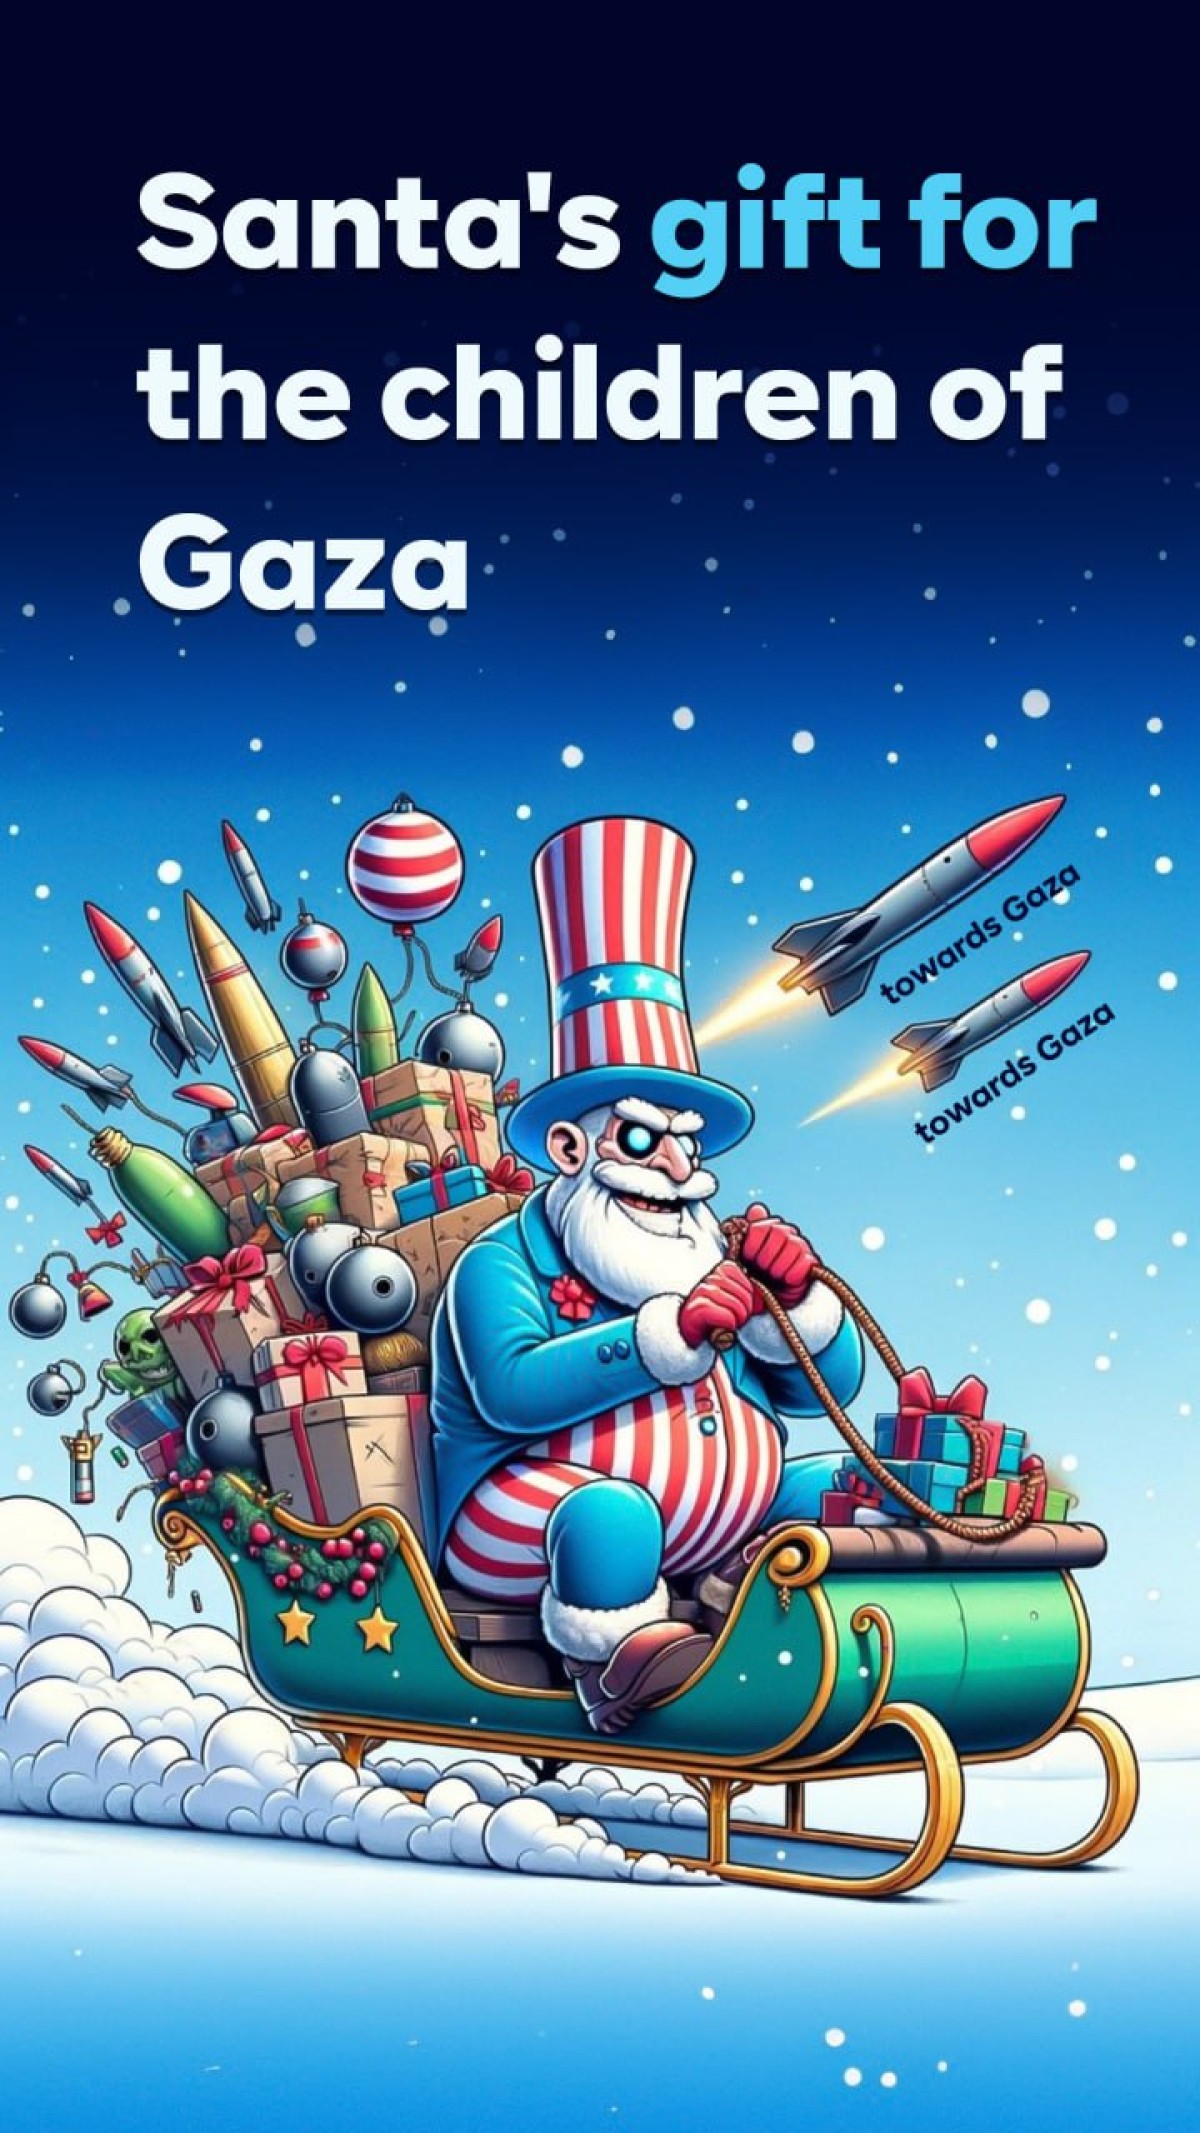 Santa's gift for the children of Gaza